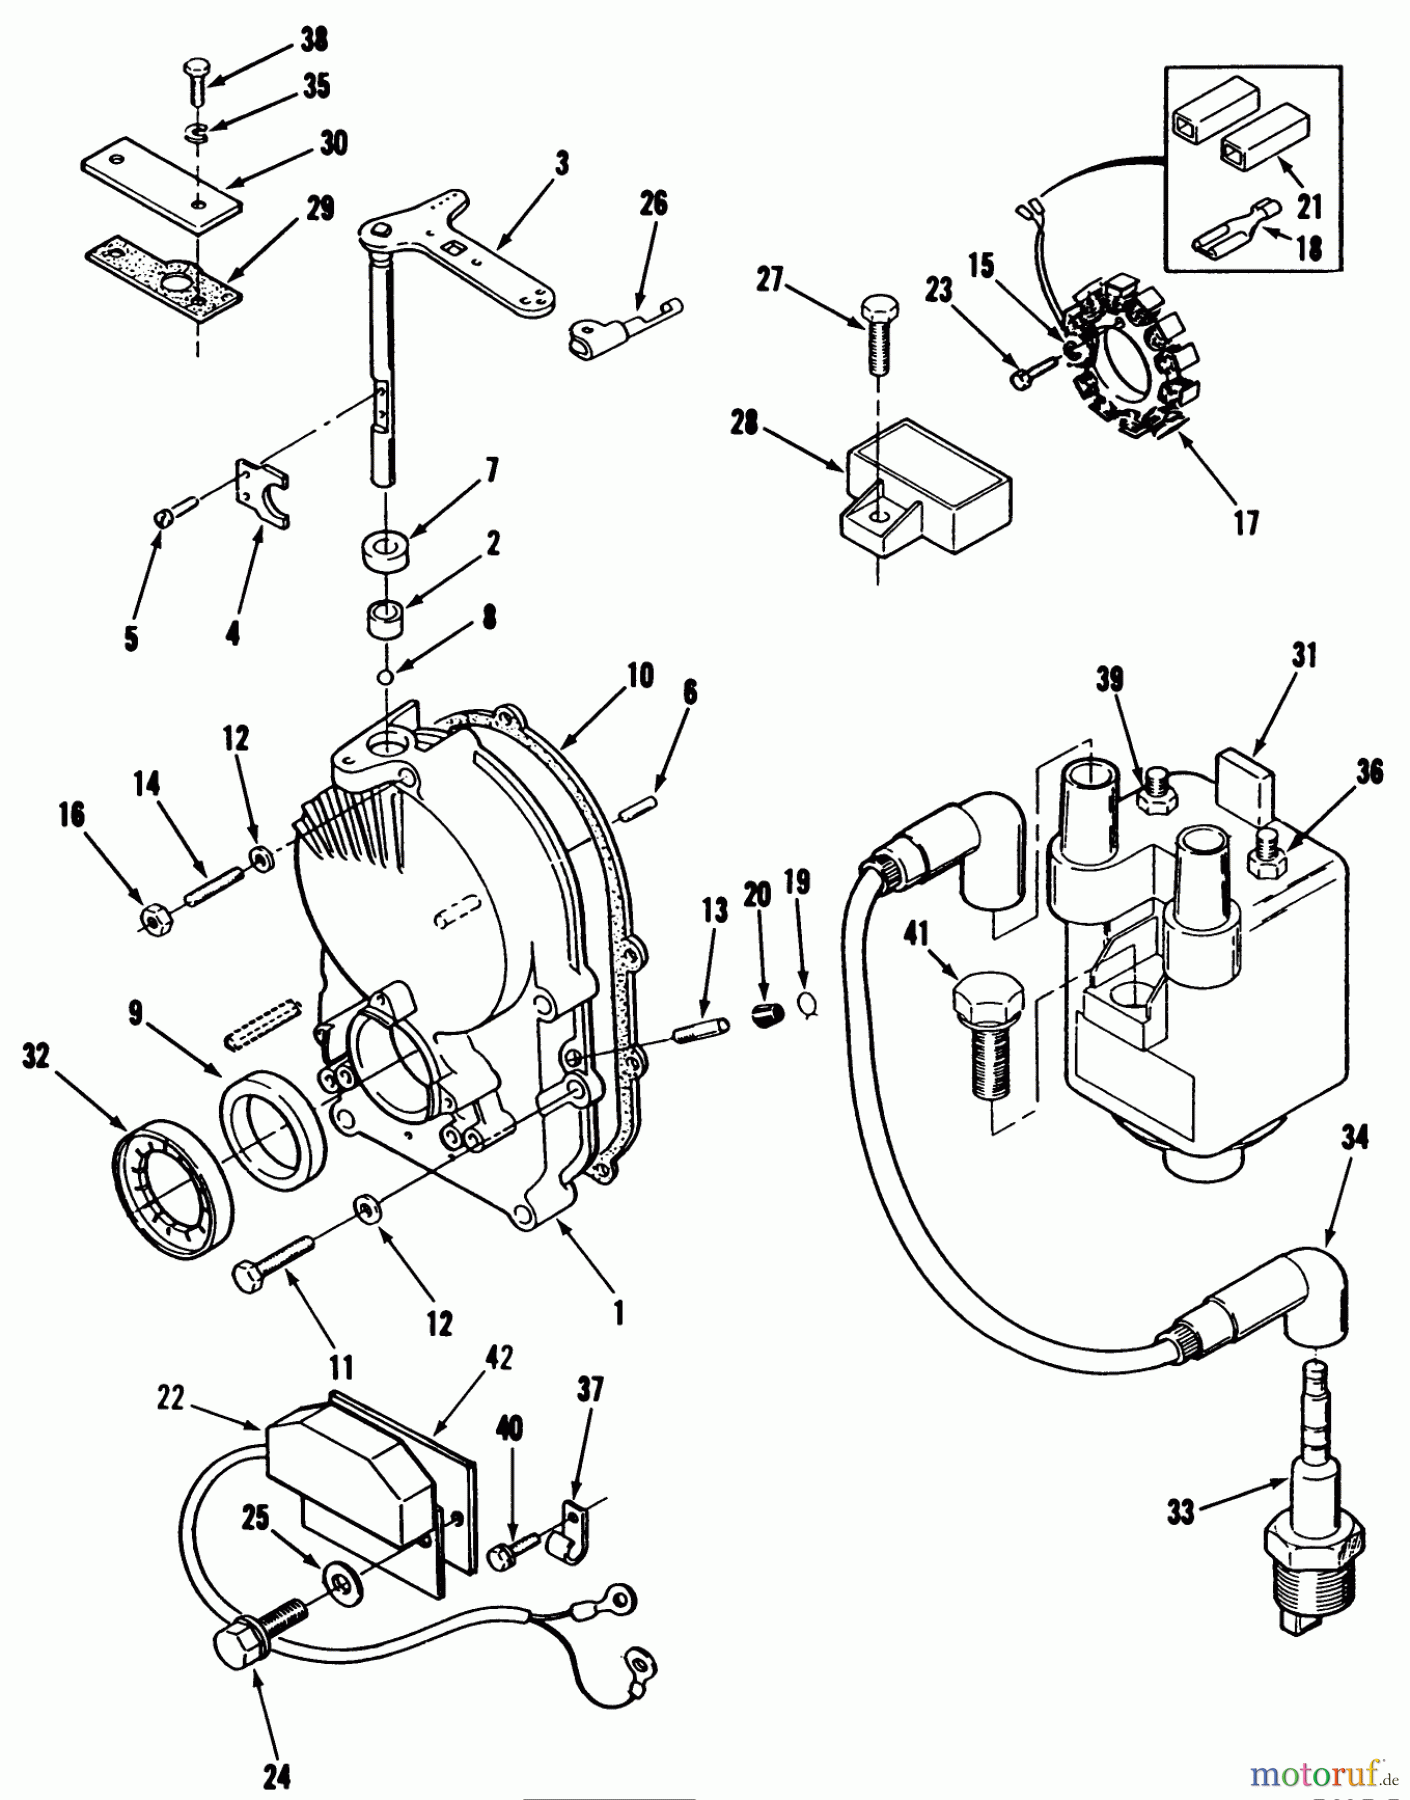  Toro Neu Mowers, Lawn & Garden Tractor Seite 1 31-12K802 (312-8) - Toro 312-8 Garden Tractor, 1991 (1000001-1999999) GEARCASE AND IGNITION CONTROLS